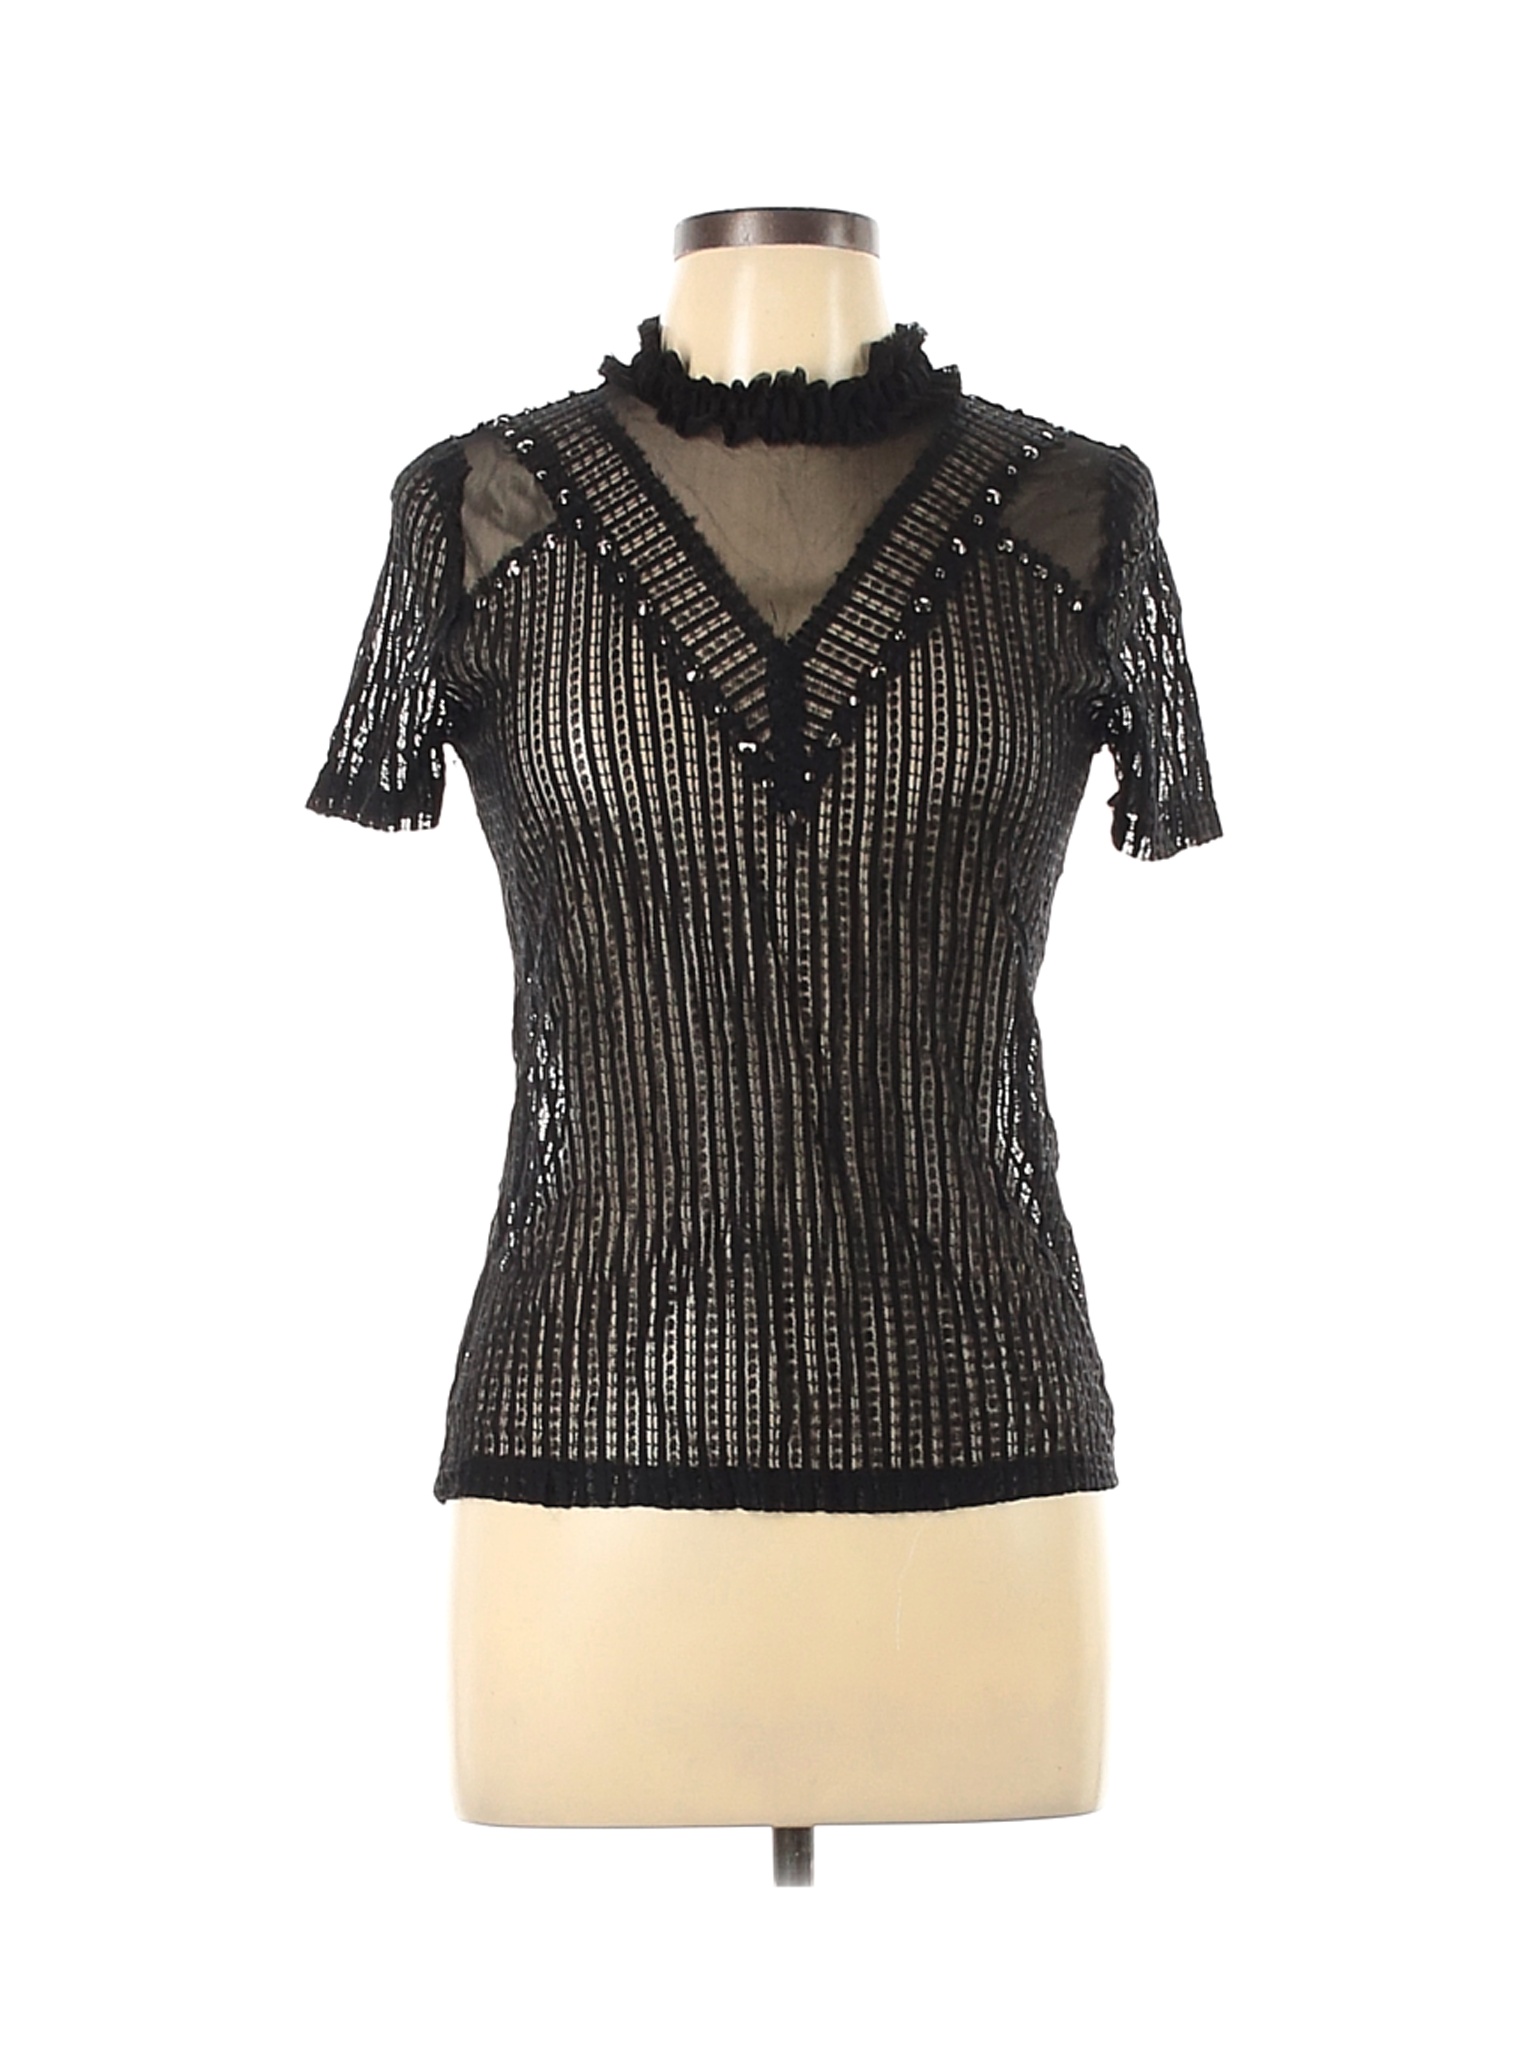 Trafaluc by Zara Women Black Short Sleeve Blouse L | eBay